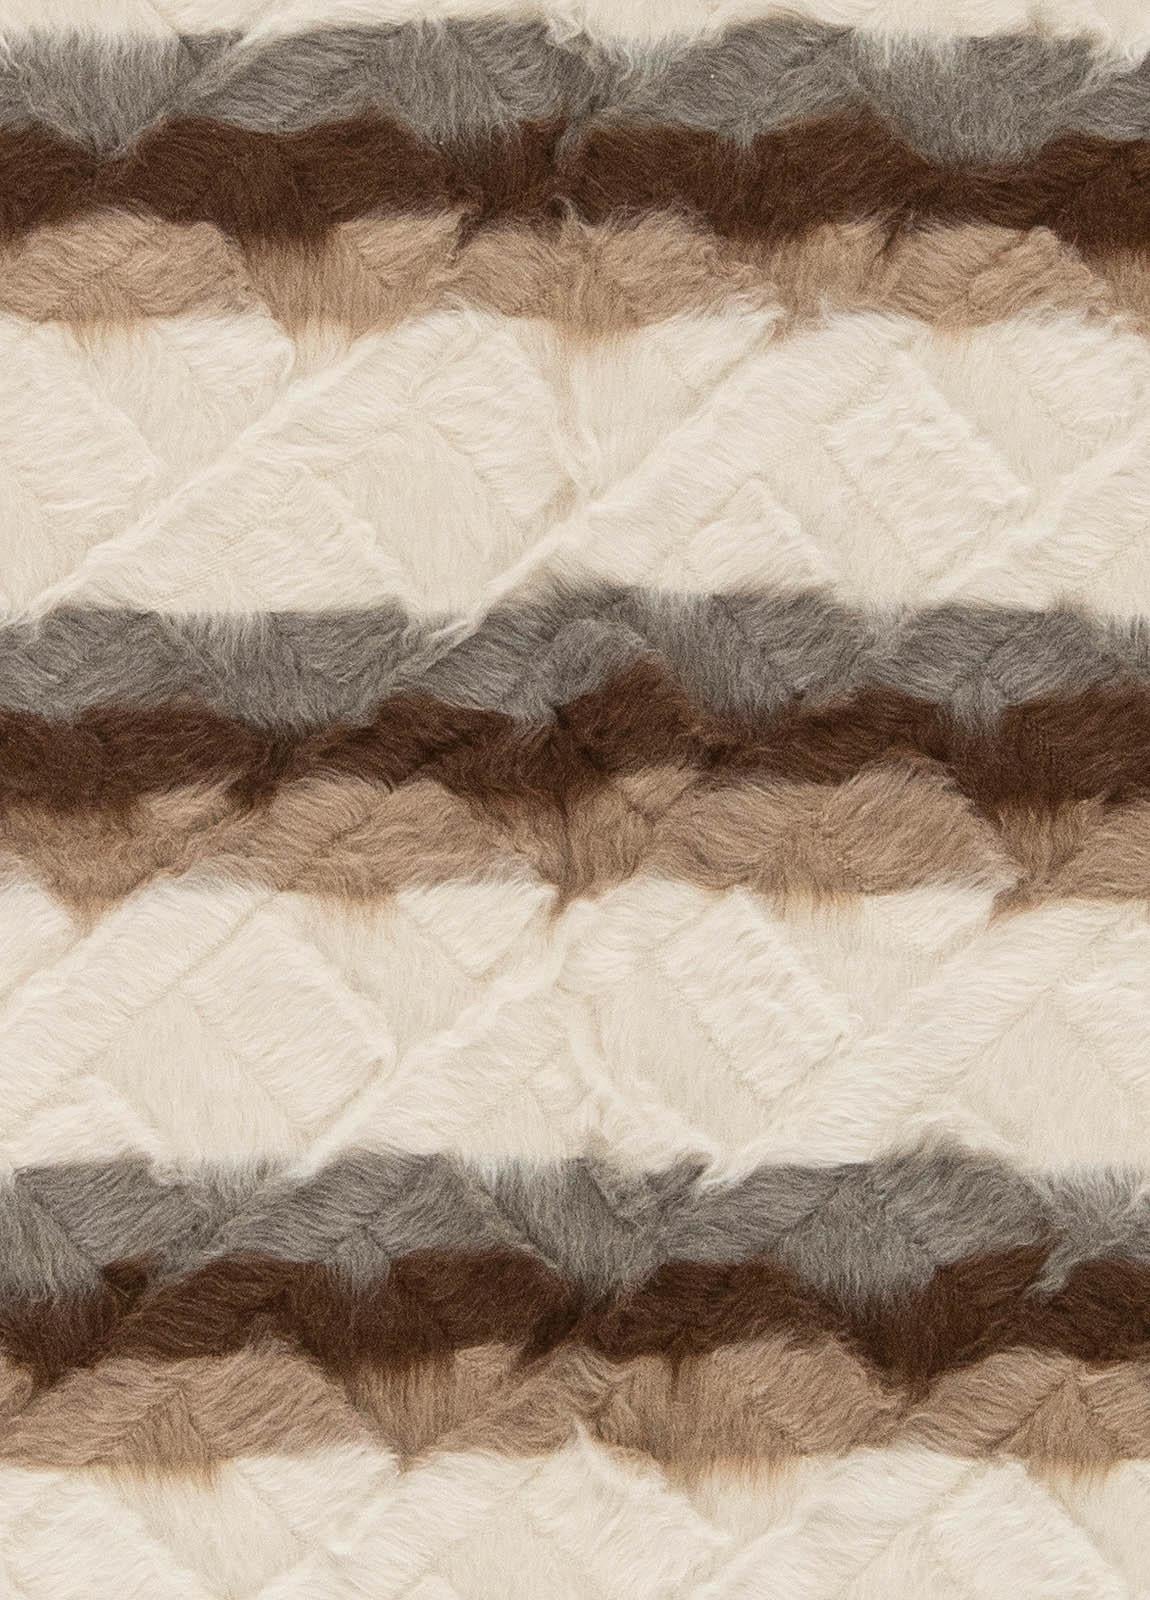 Taurus Collection striped goat hair rug by Doris Leslie Blau
Size: 6'0